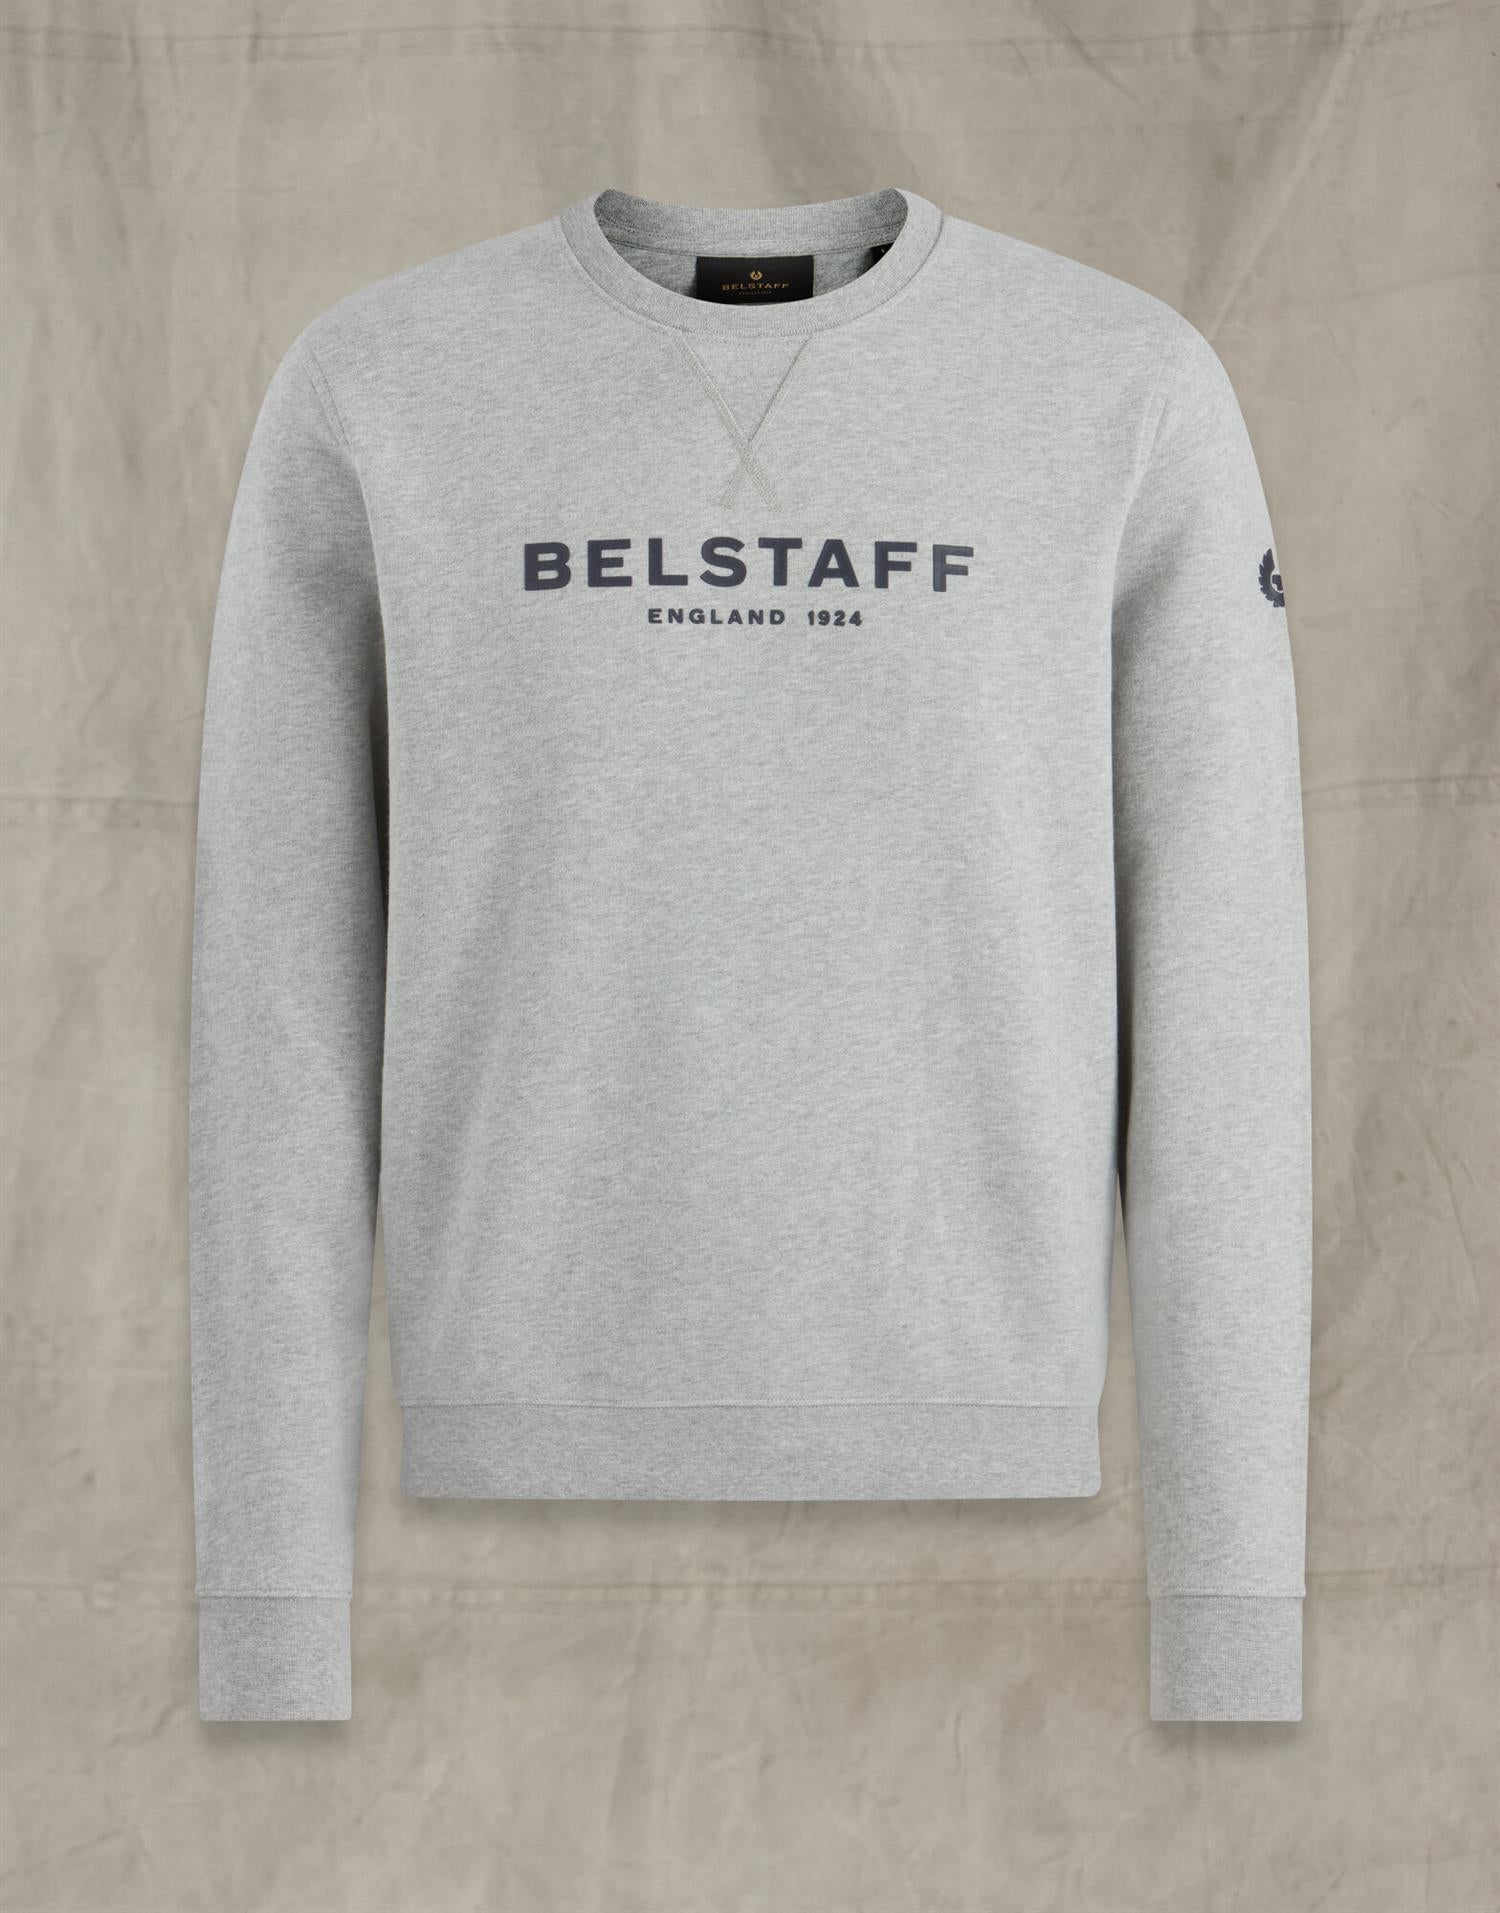 1924 Sweatshirt-Belstaff-09842 Grey Melange / Dark Navy-Product.Variant,2102,5683739-ProductId,71120674-Product.Number,belstaff,College,gensere,Grå,Herre